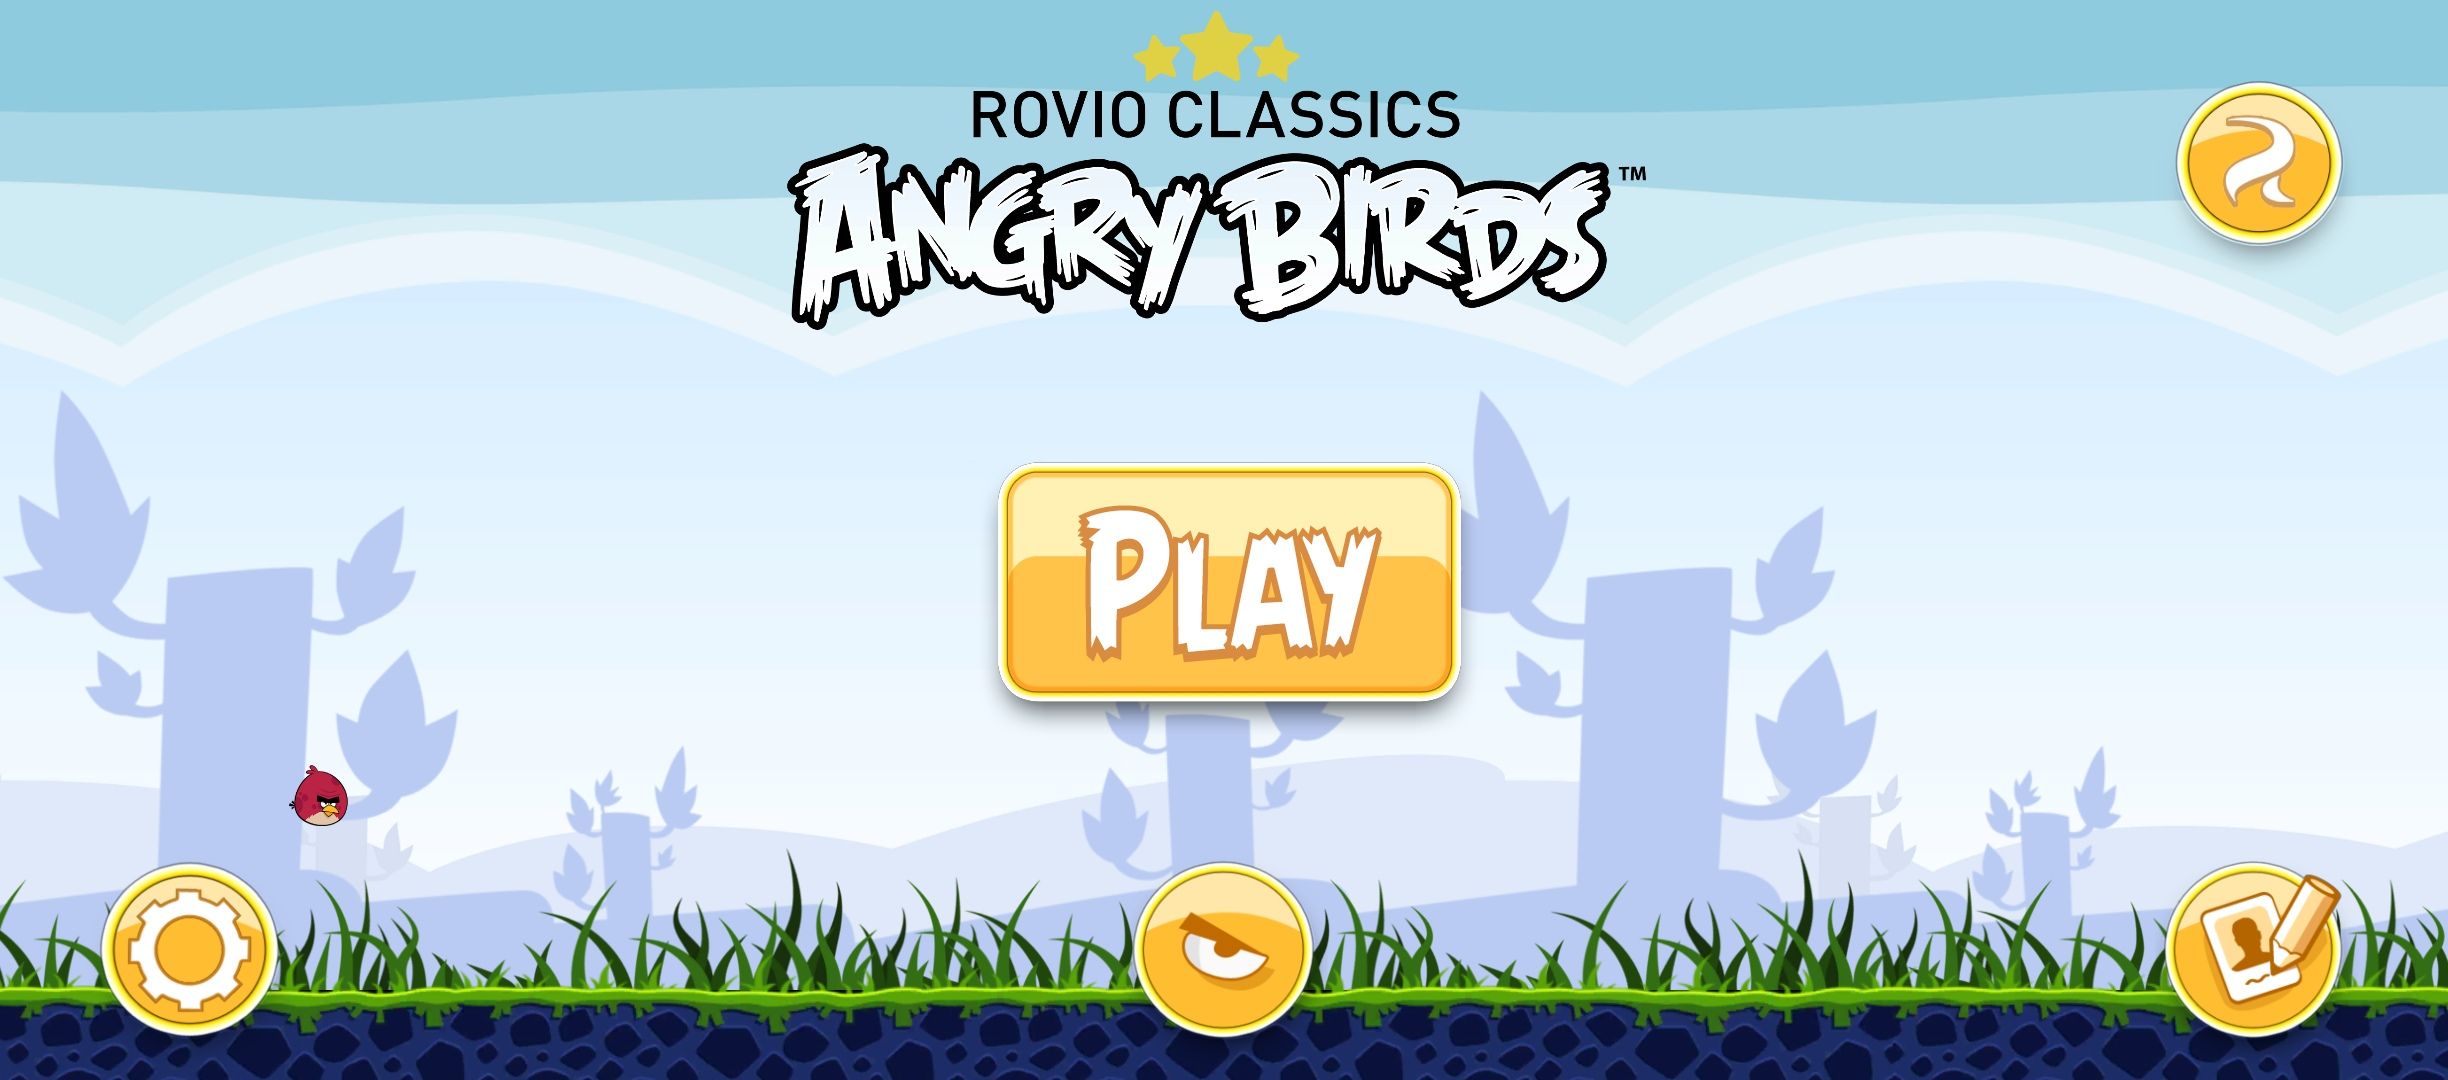 Rovio Classics Angry Birds release hero